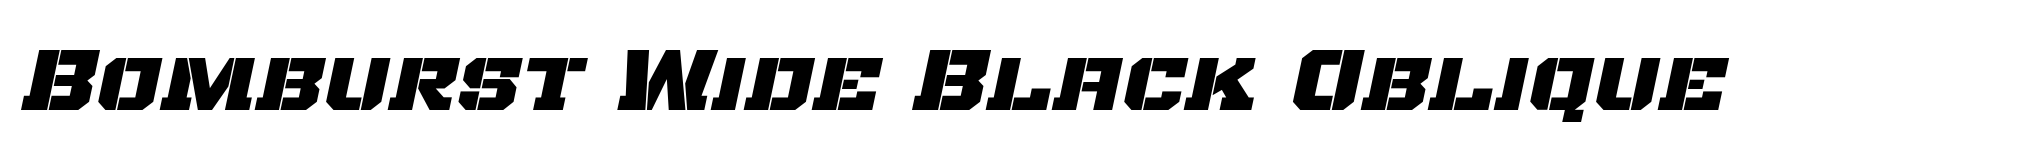 Bomburst Wide Black Oblique image